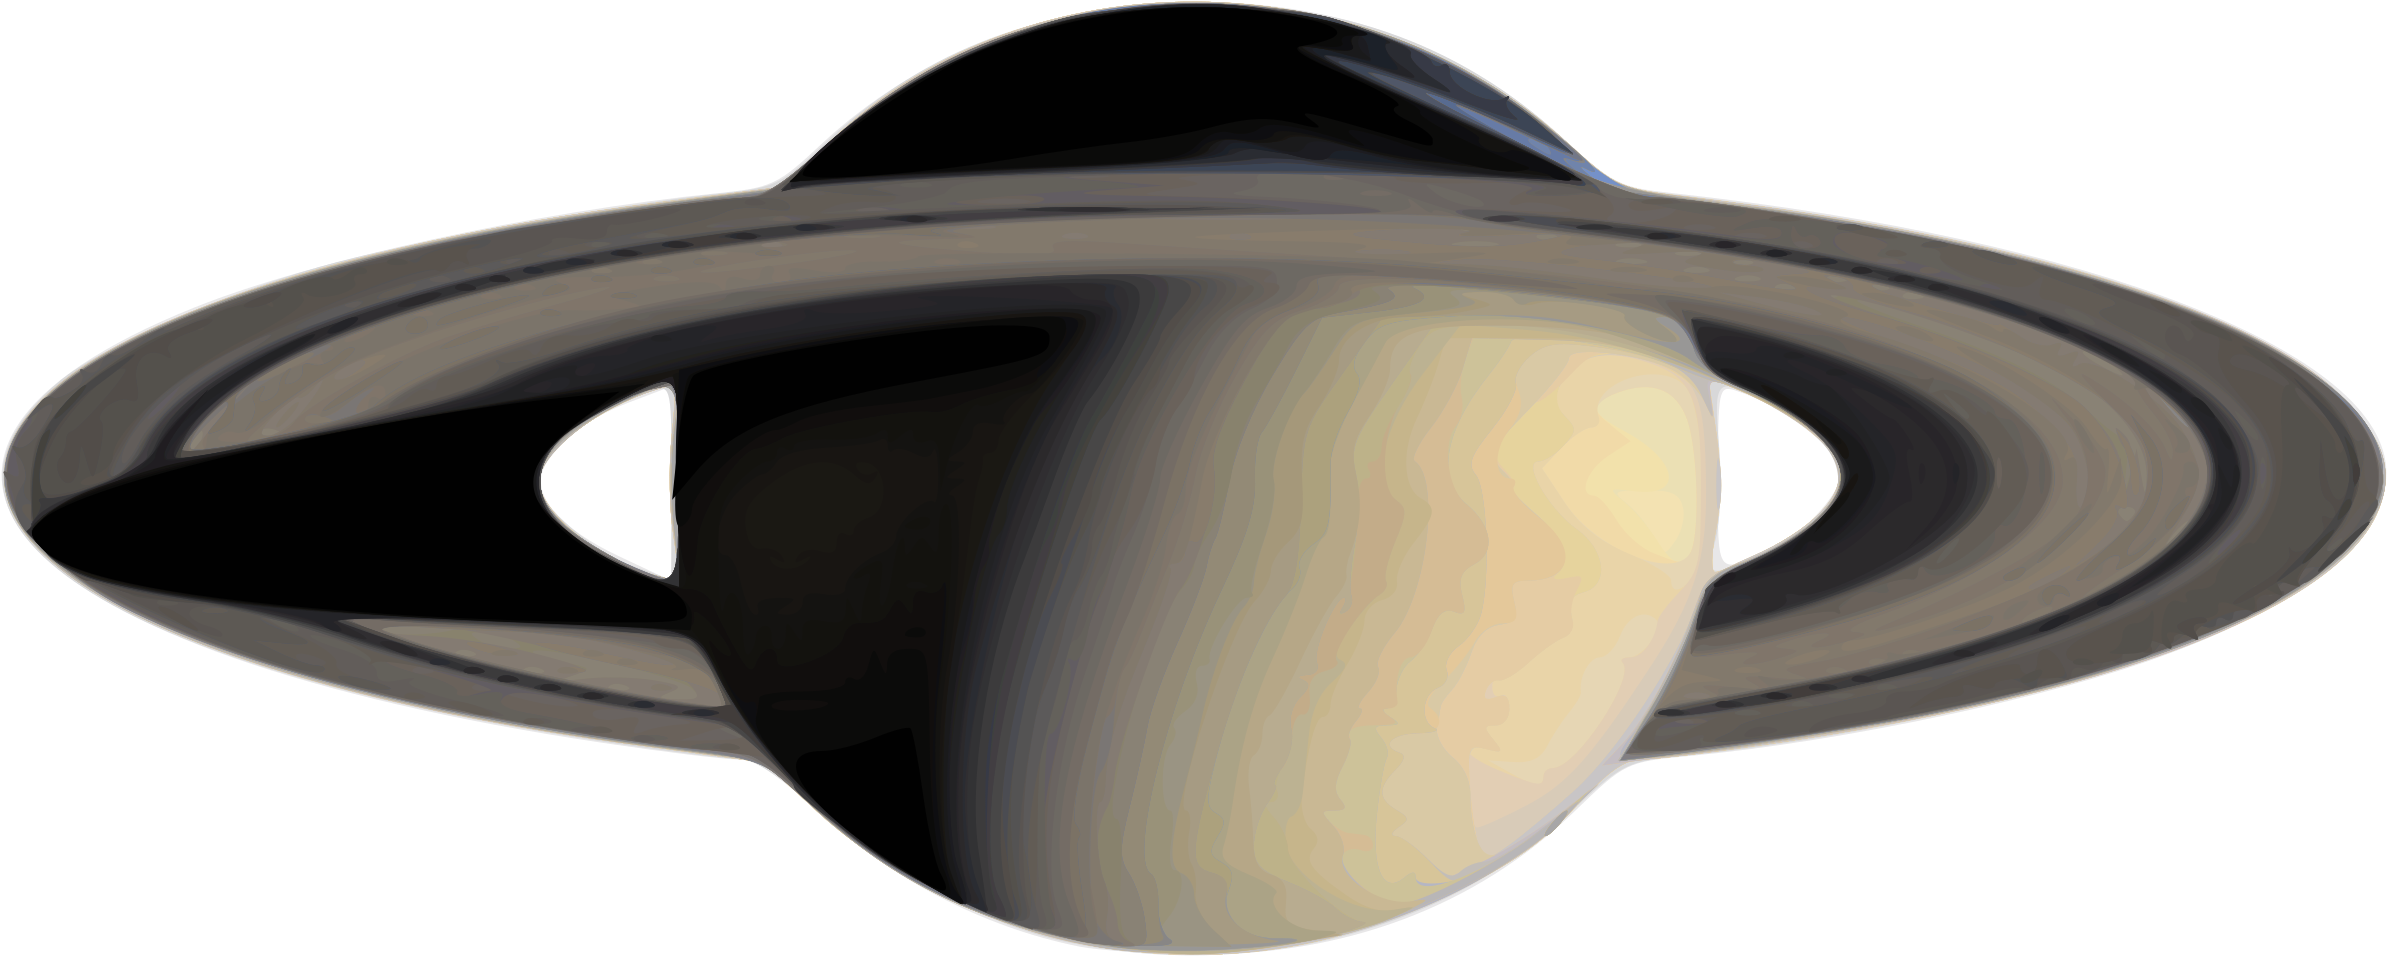 Big Image - Planet Saturn White Background (2400x969)